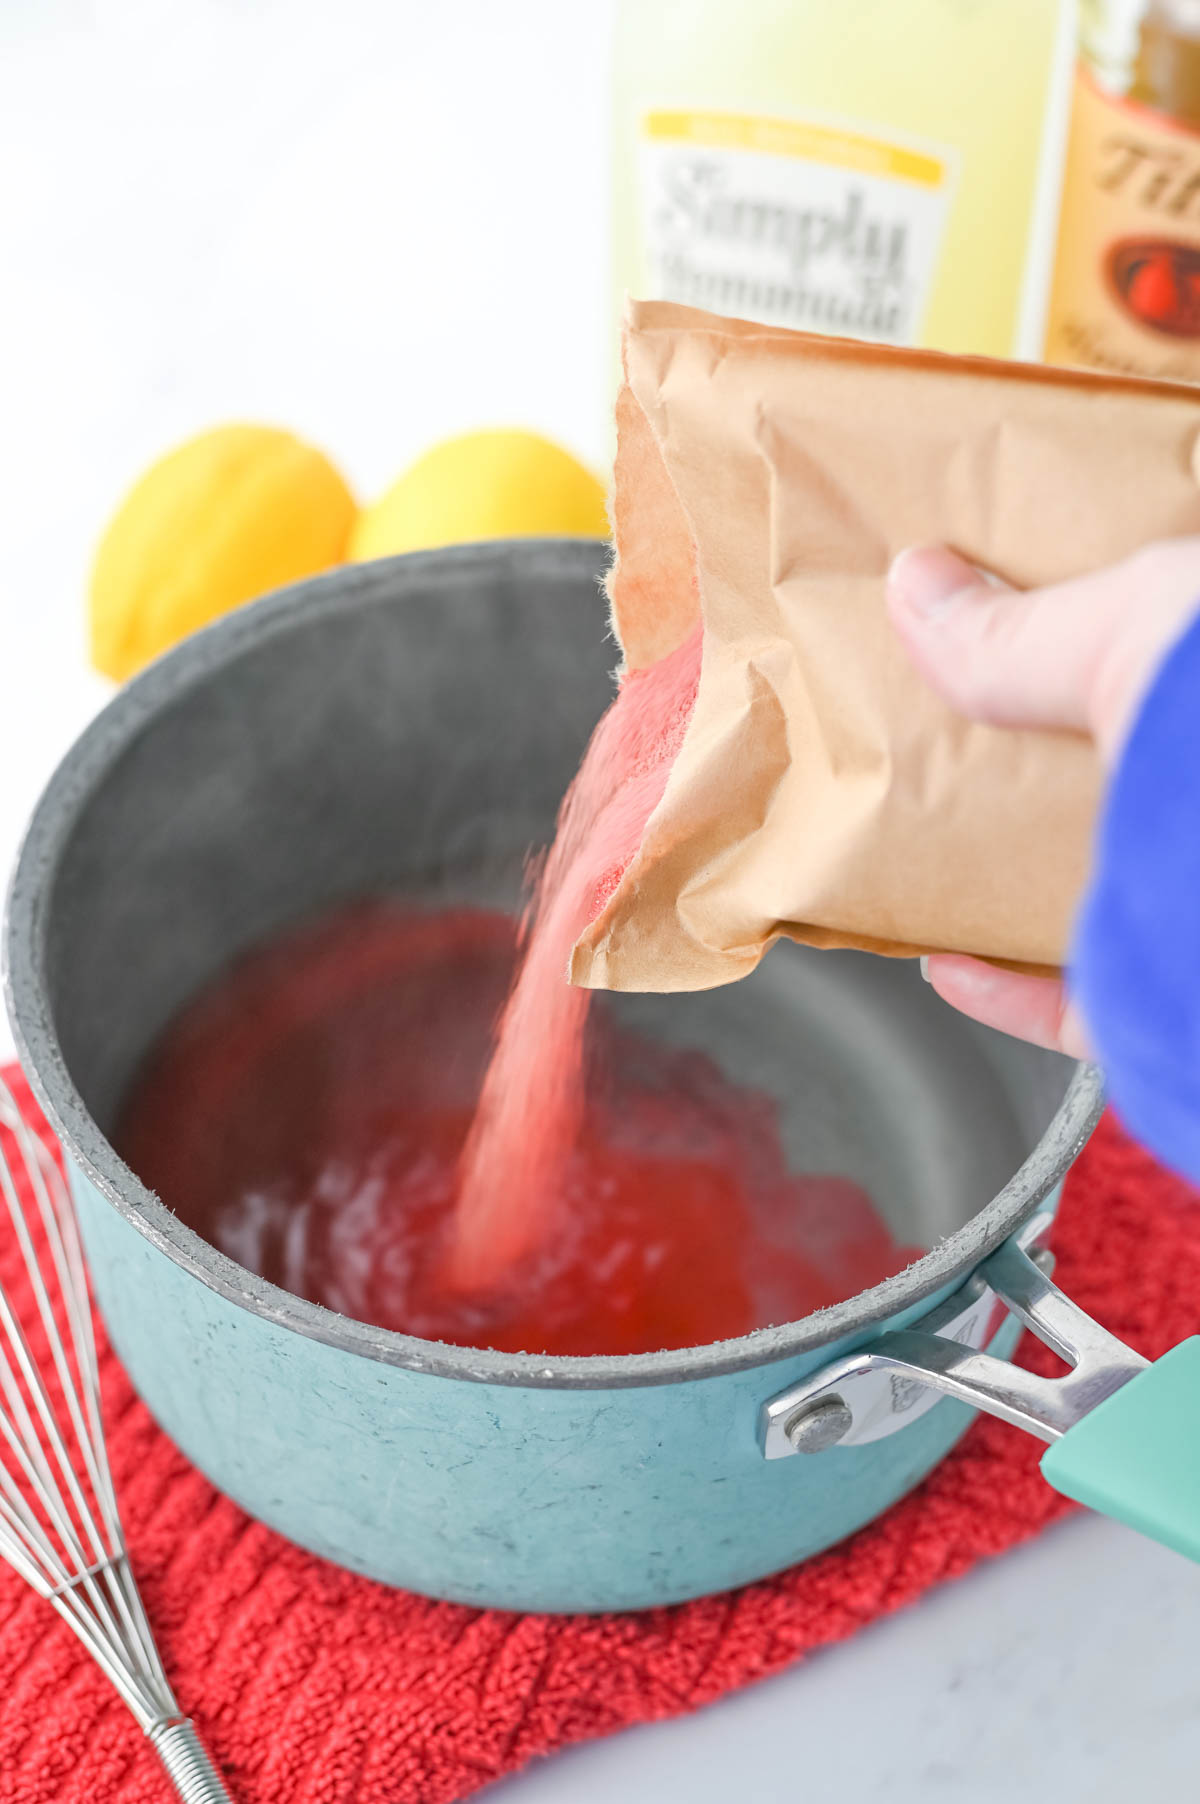 A person pouring jello powder into a pan.